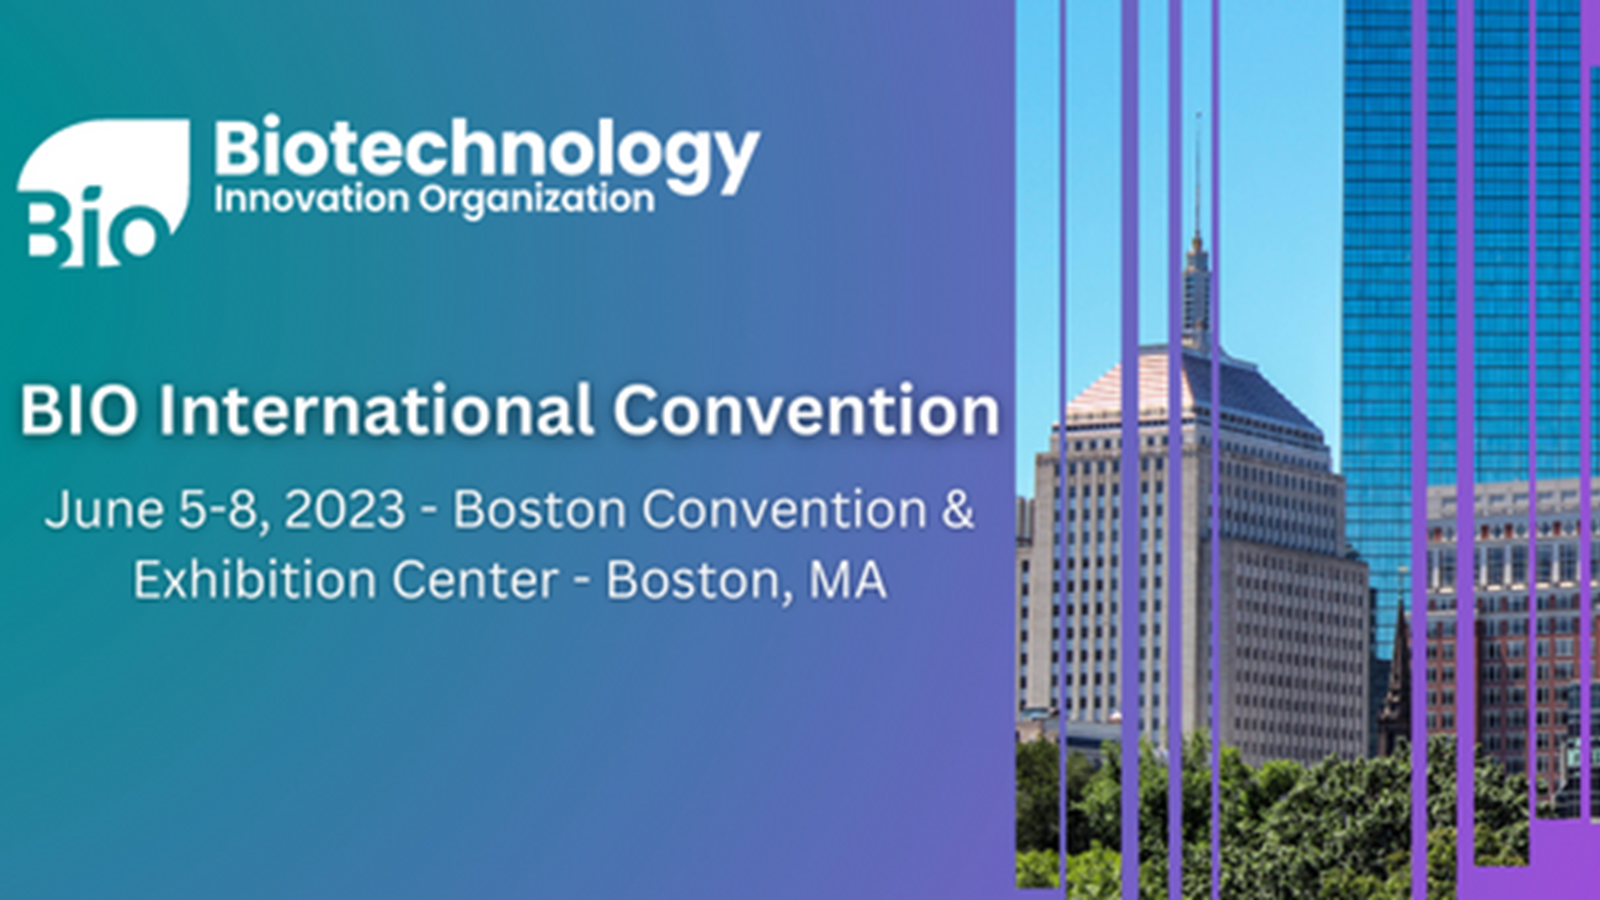 BIO International Convention June 5-8 in Boston